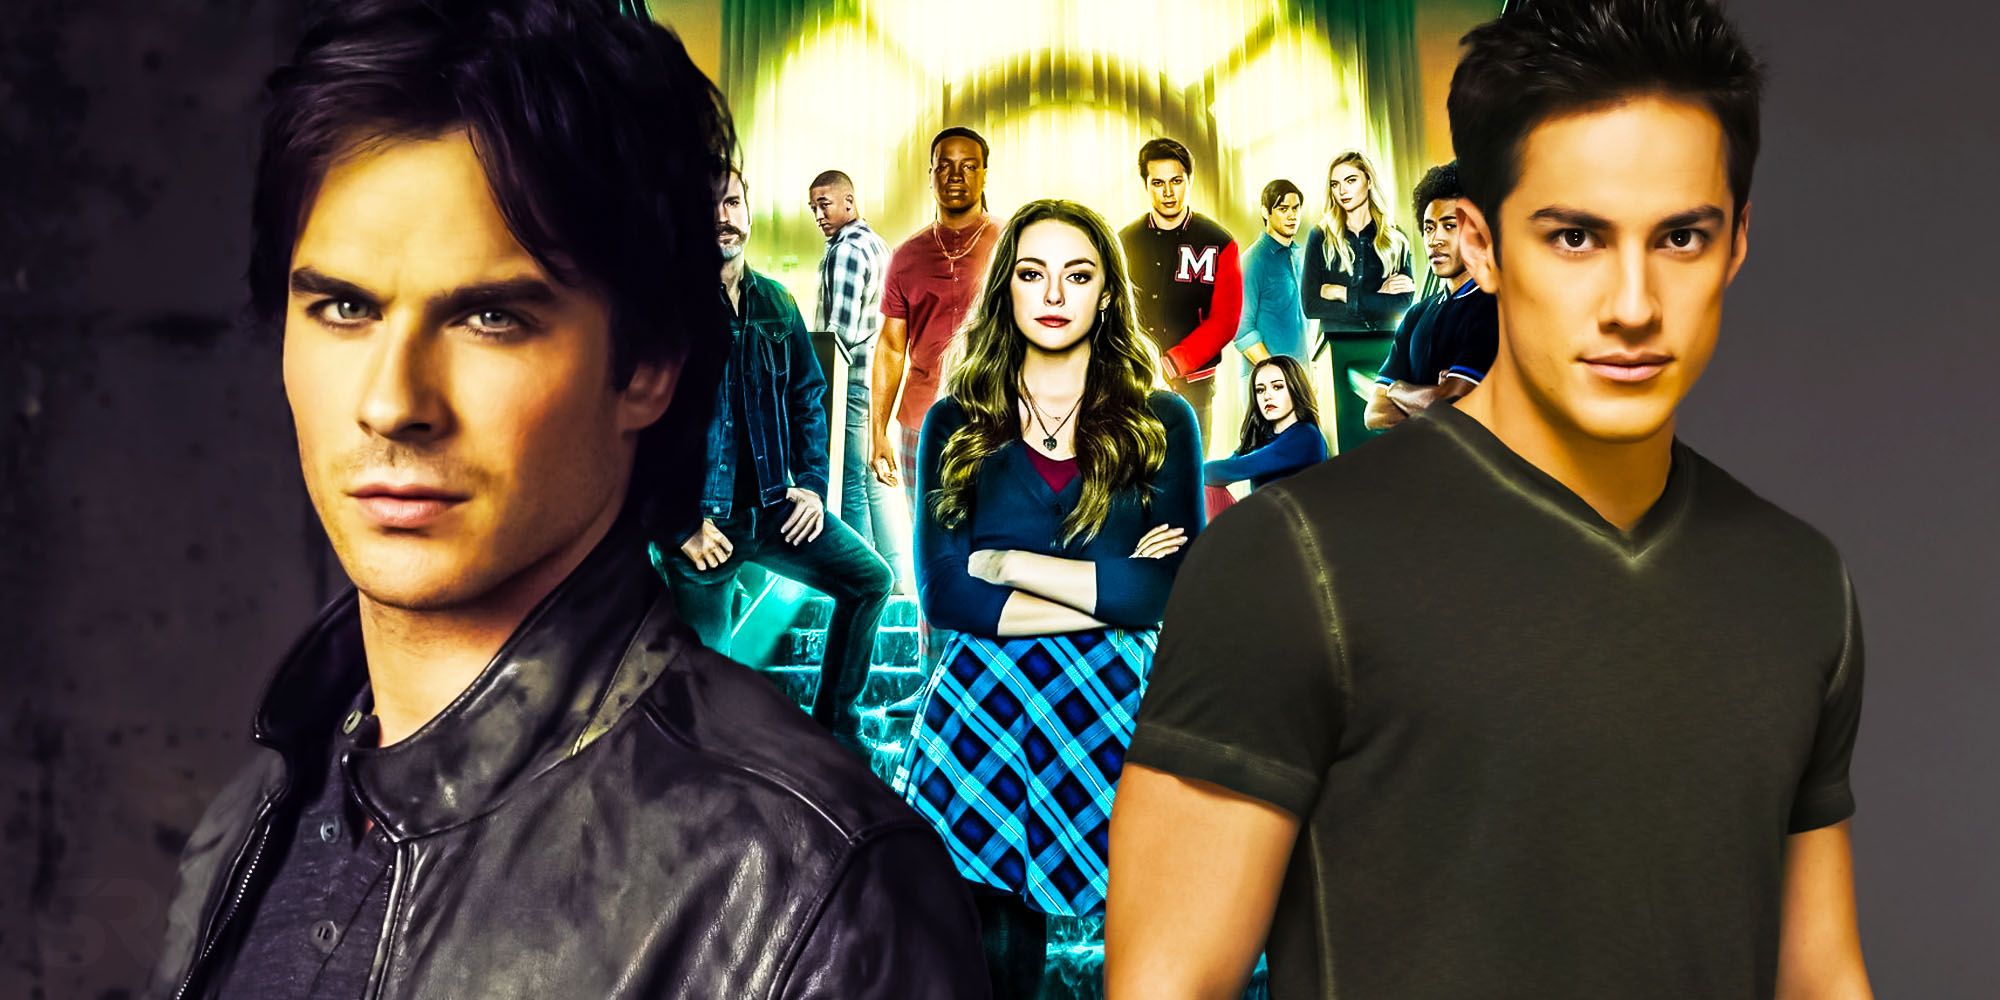 Legacies Needs To Treat Supernatural Characters LIke The Vampire Diaries